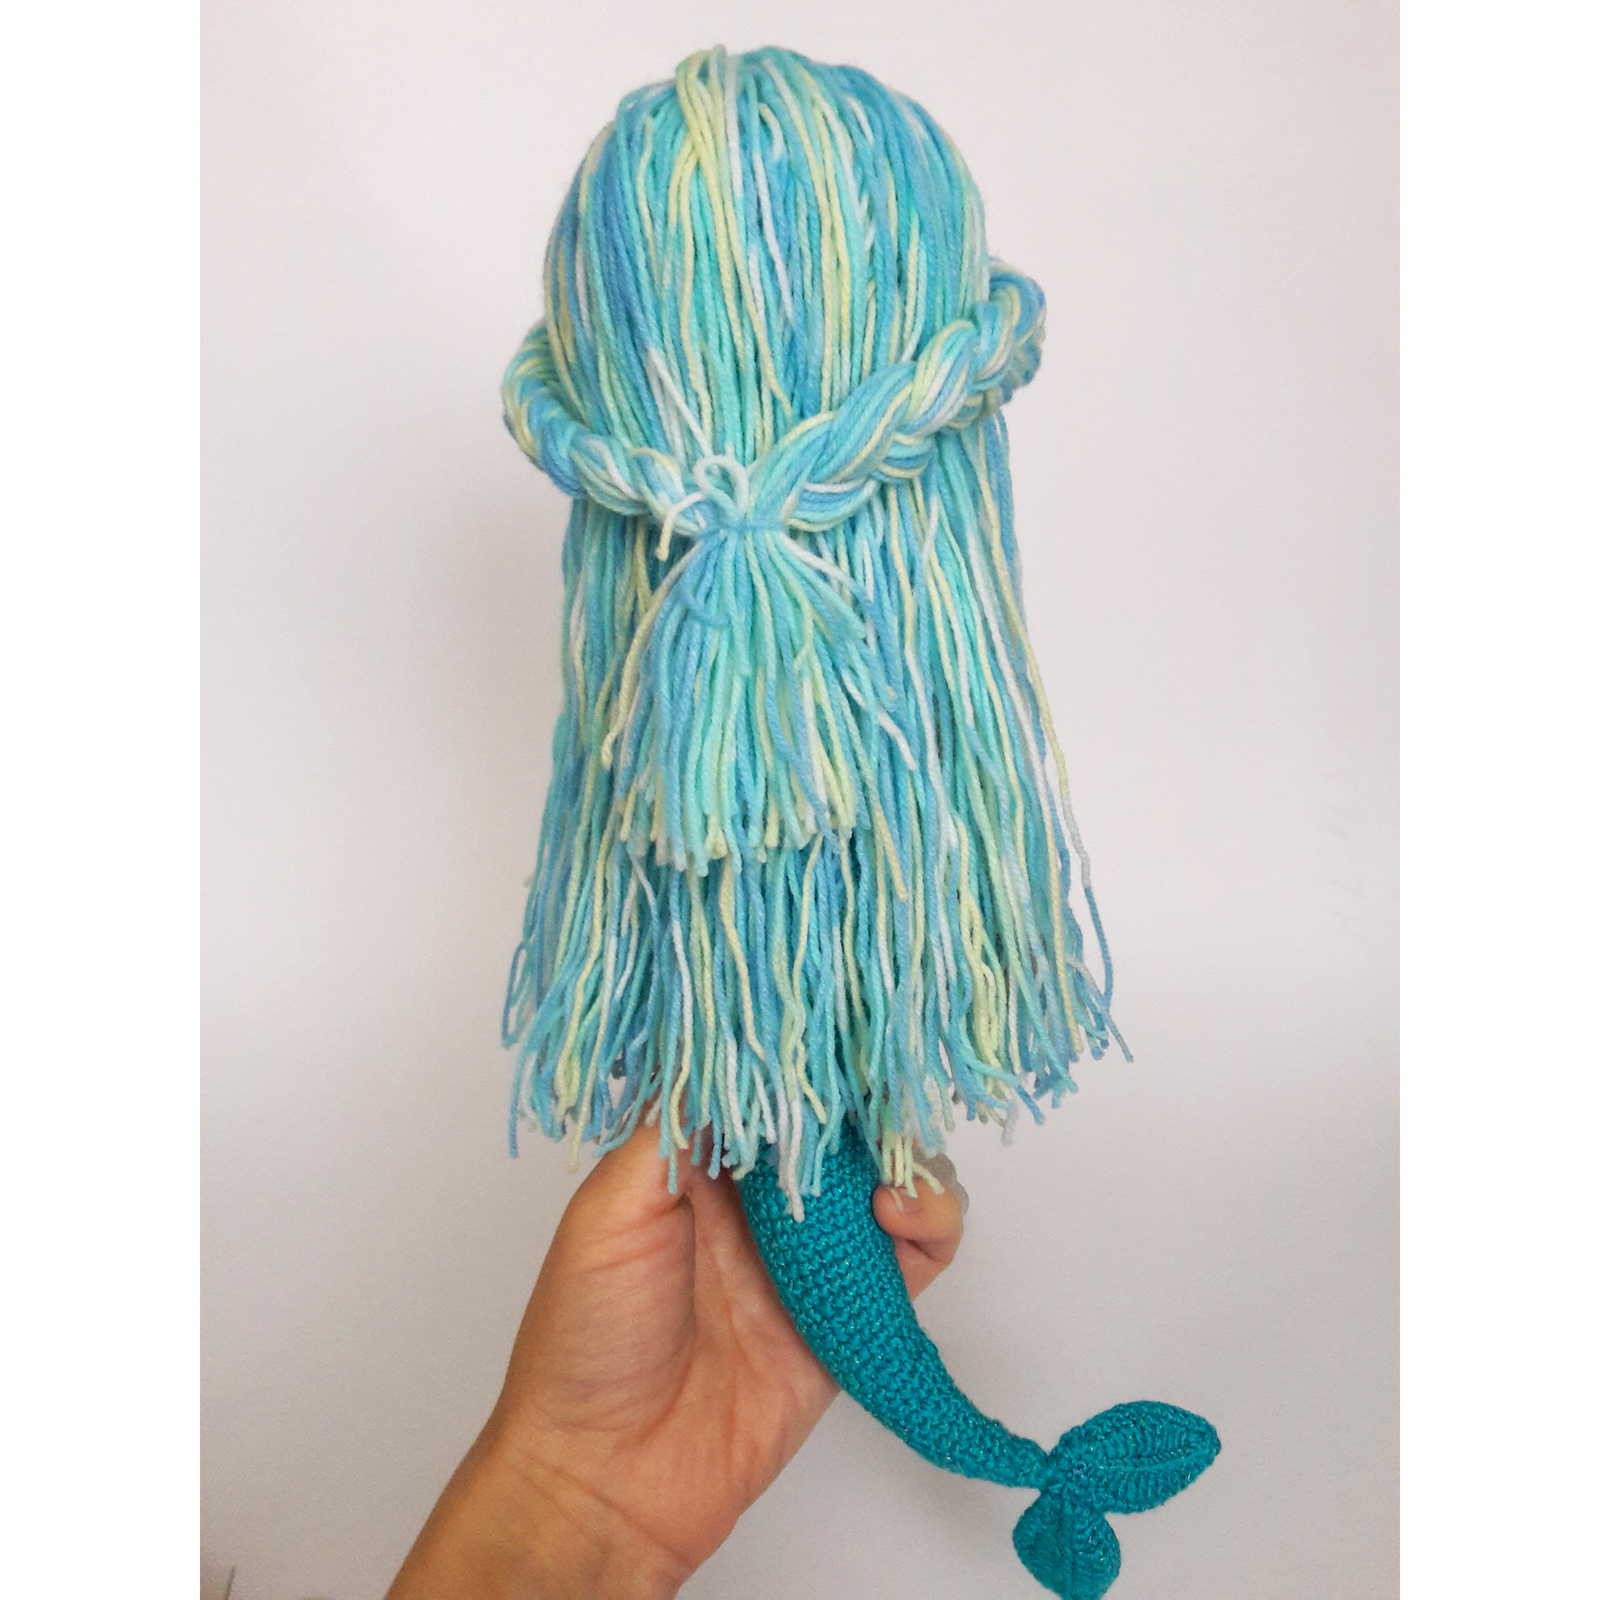 Knitted toy Mermaid in Lalylala style - Longpost, Knitting, Doll, Crochet, Mermaid, Needlework without process, Needlemen, My